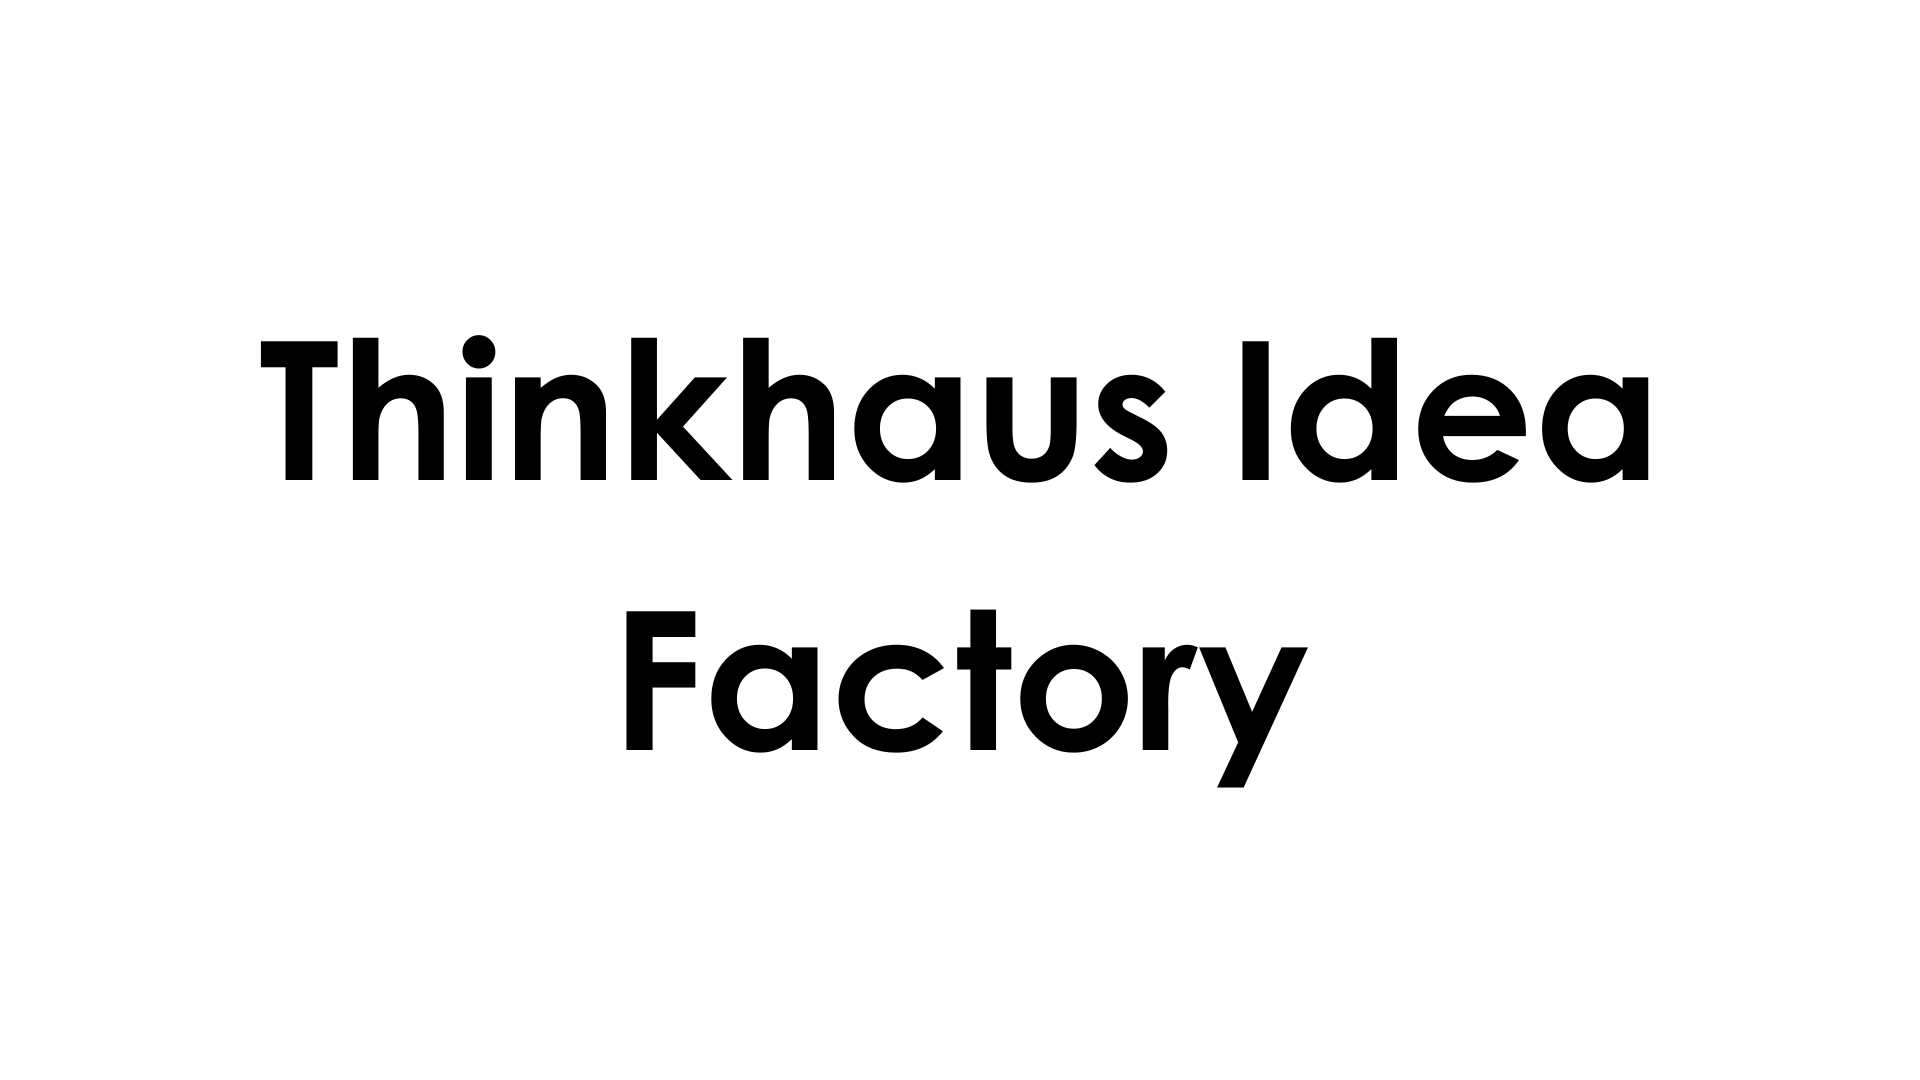 Thinkhaus Idea Factory